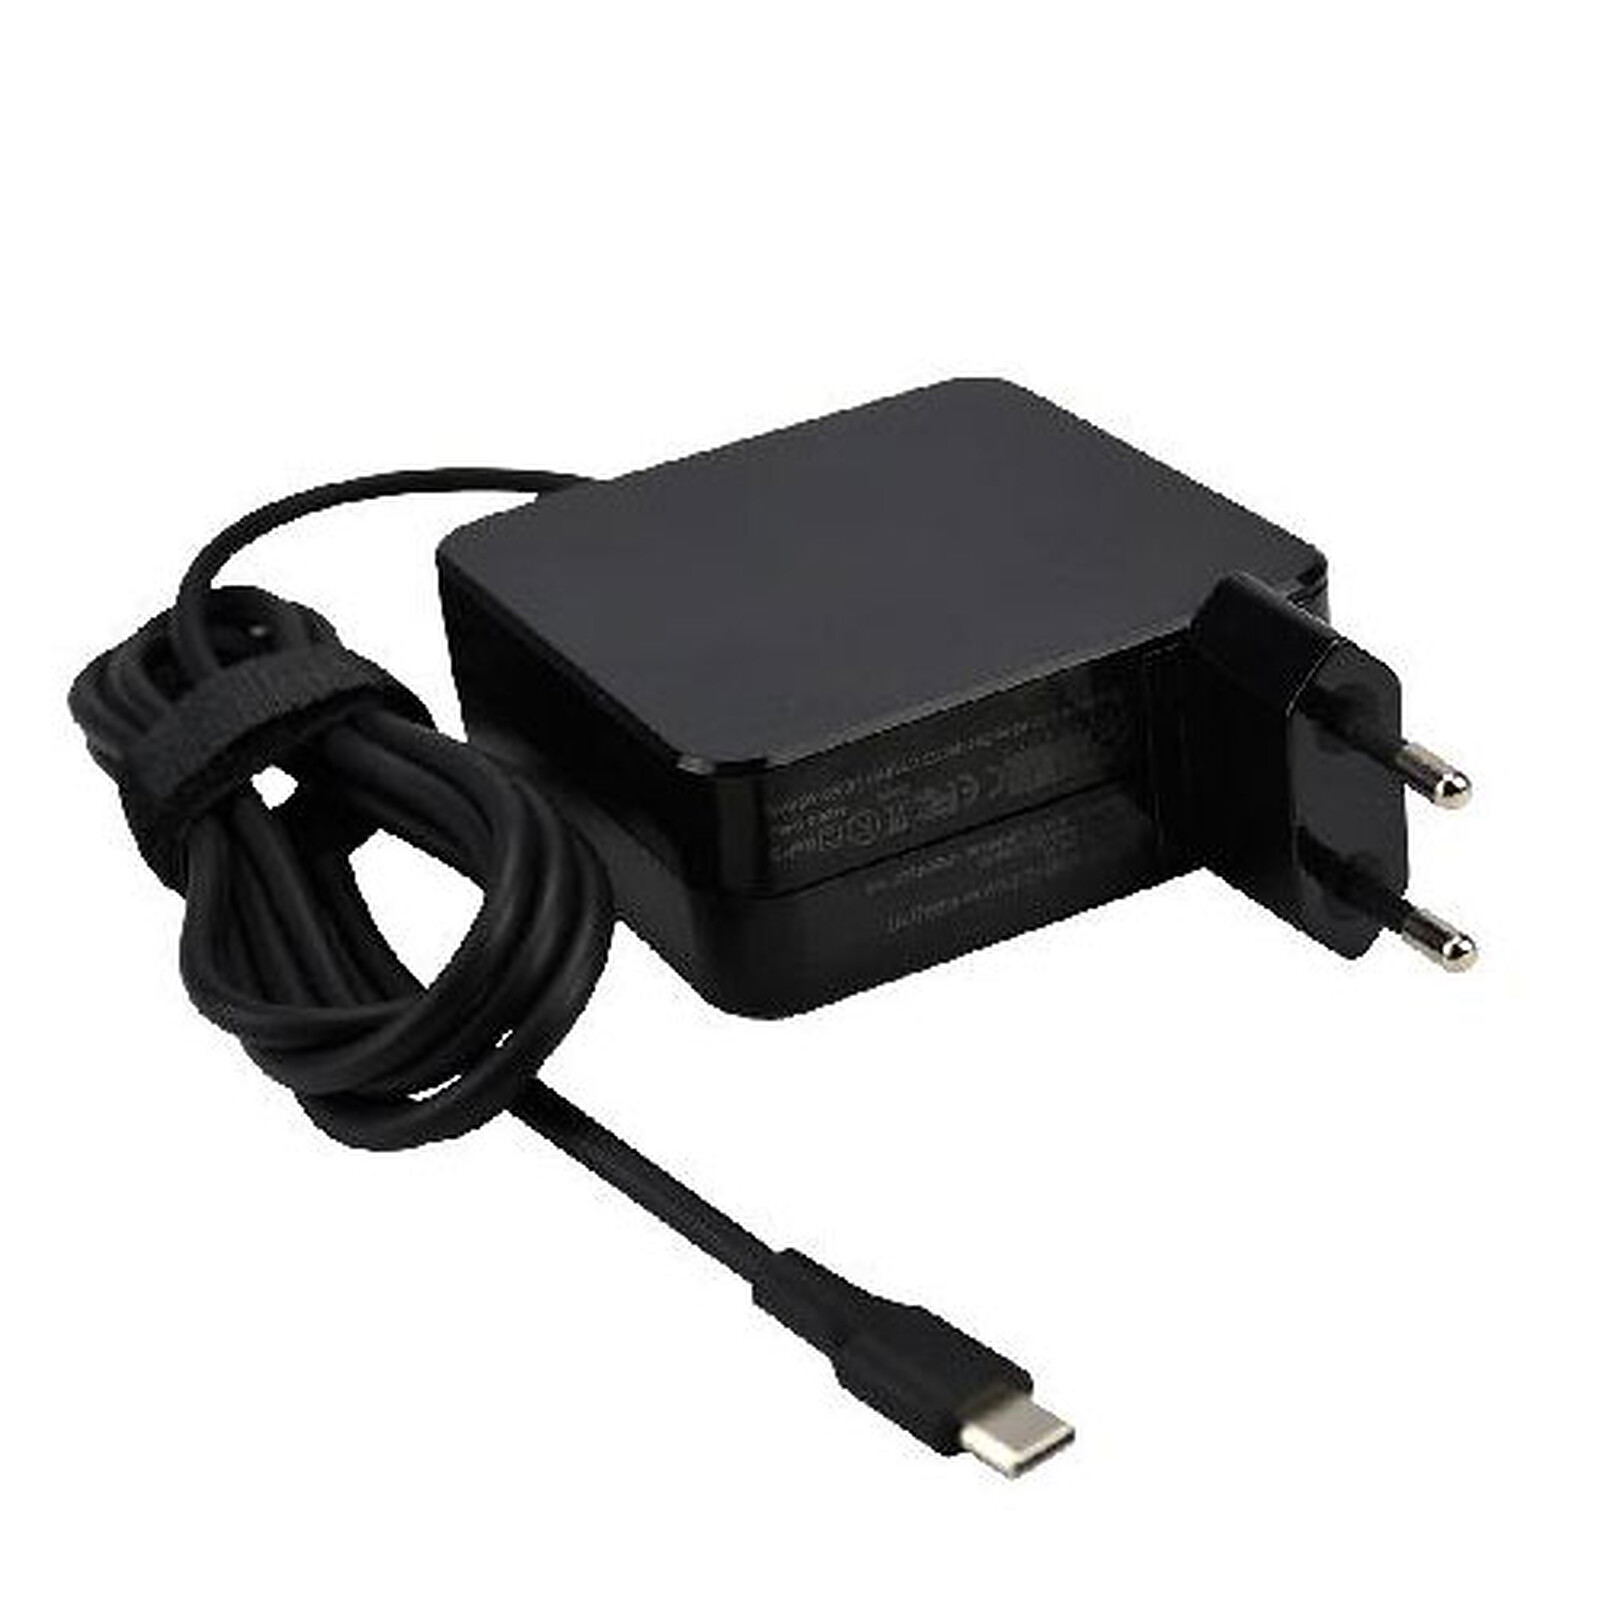 Chargeur USB-C Power Delivery (65W) - USB - Garantie 3 ans LDLC